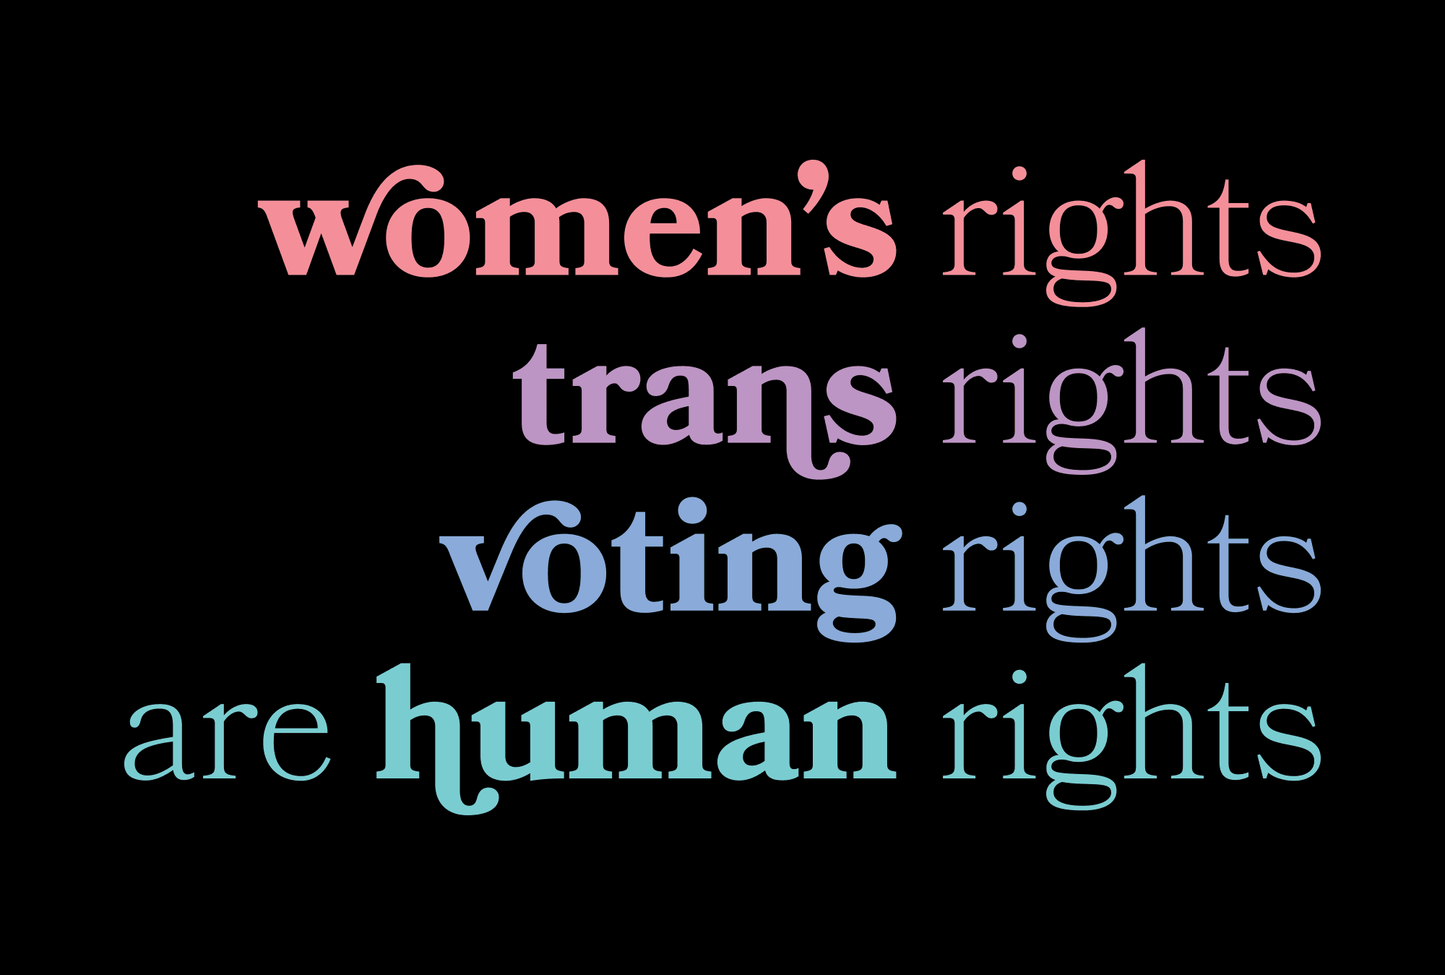 Human Rights - Women’s V-Neck Tee